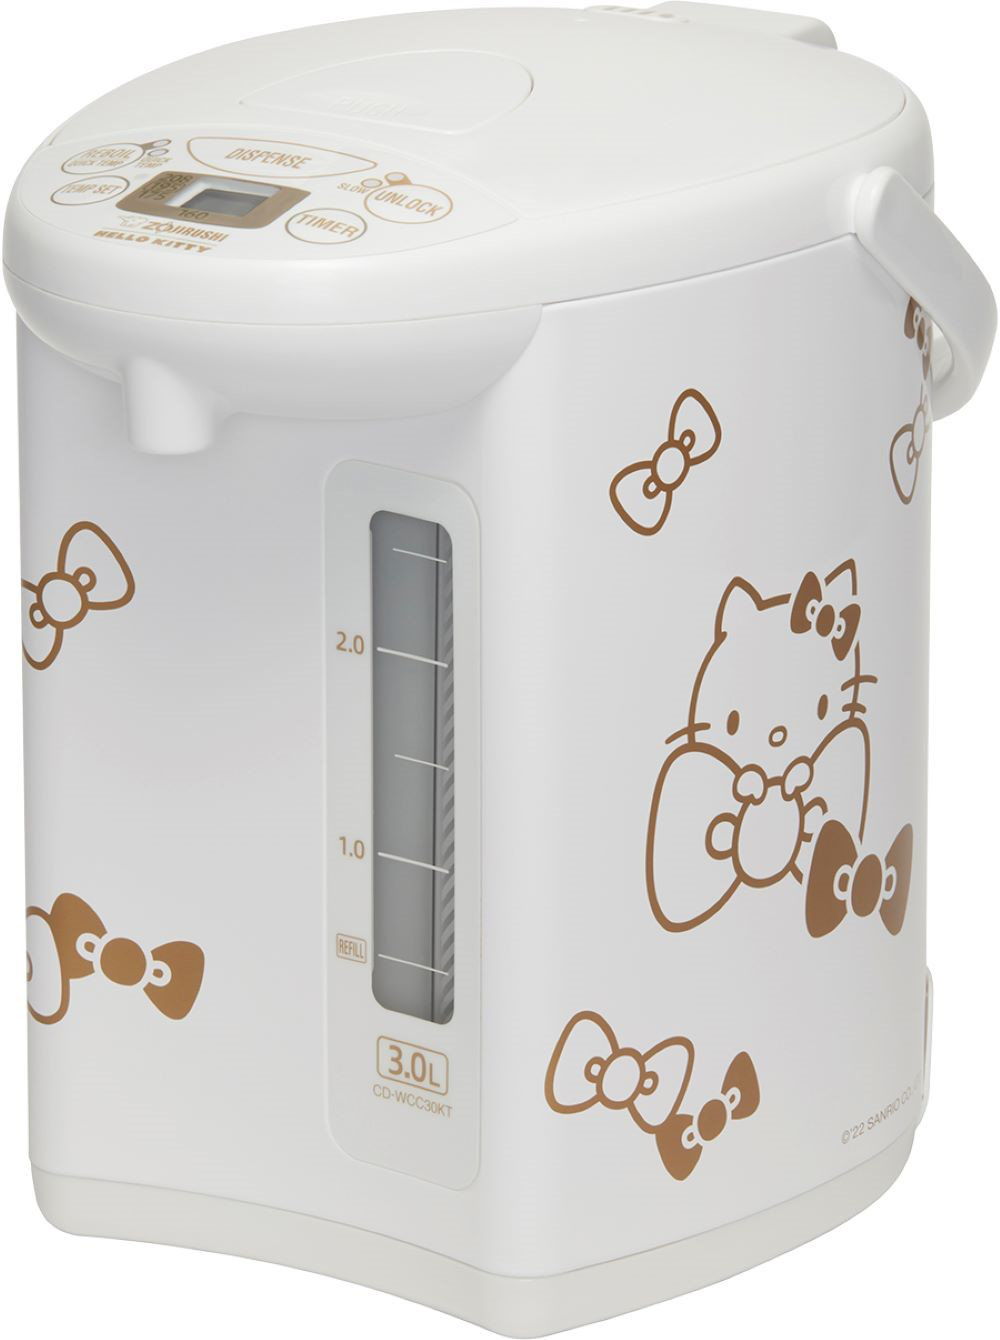 Zojirushi Hello Kitty 3 Liter Water Boiler And Warmer & Reviews